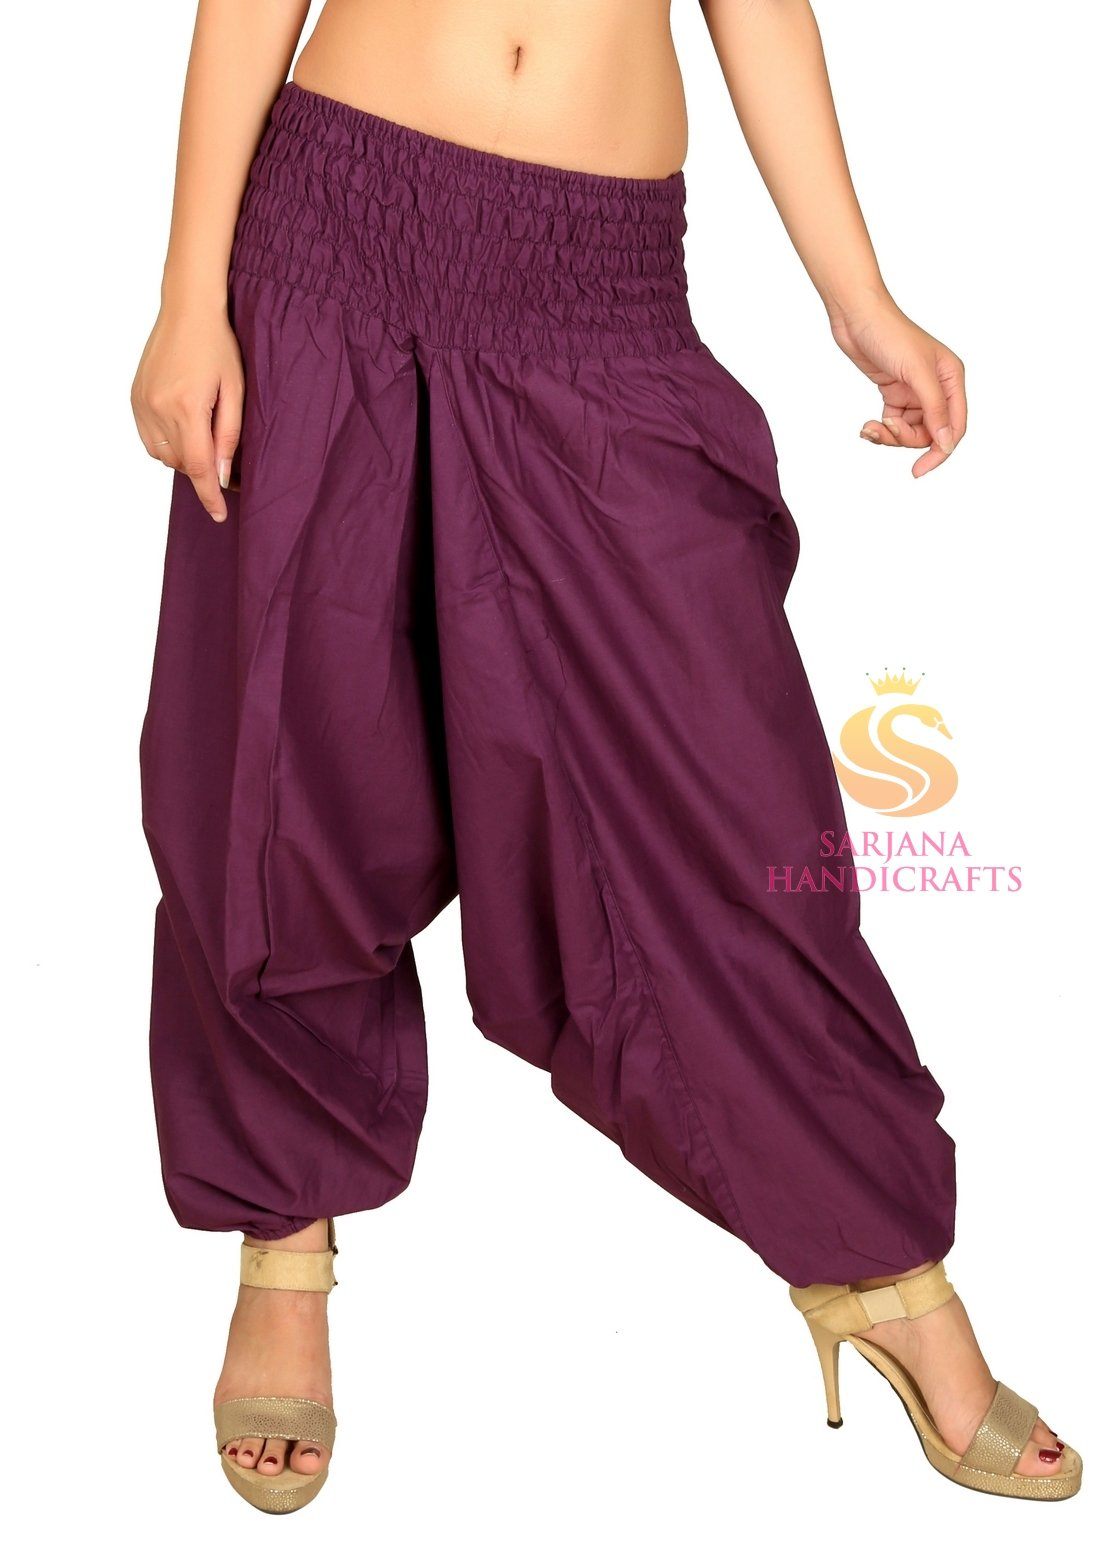 SARJANA Womens Cotton Solid Harem Pants Yoga Trouser Genie Hippie Drop ...